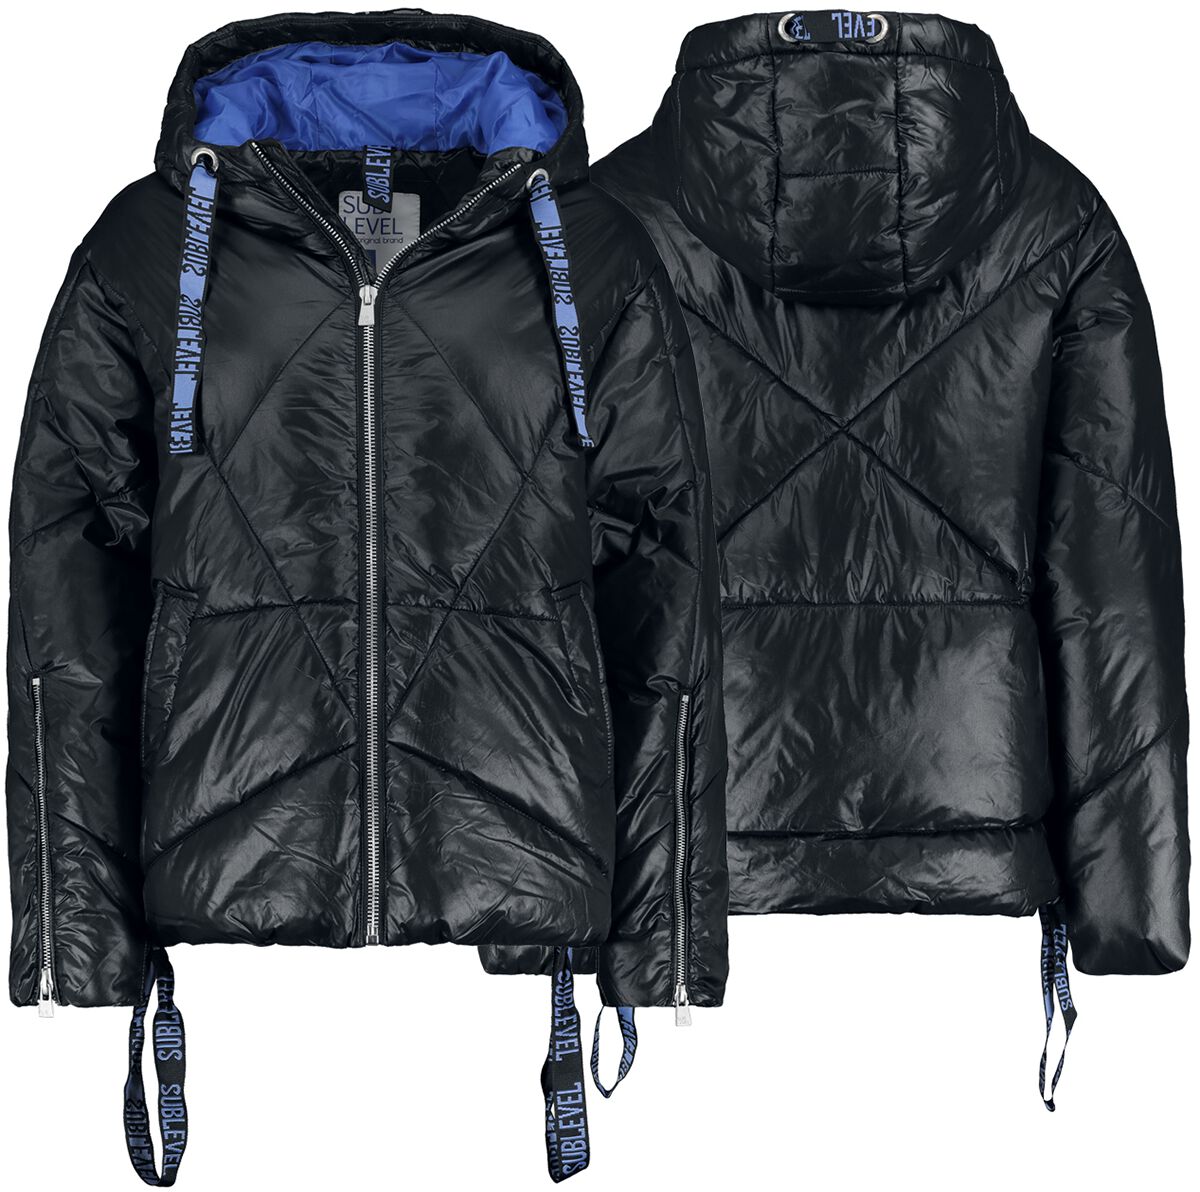 Sublevel Zipper Jacket Winter Jacket black